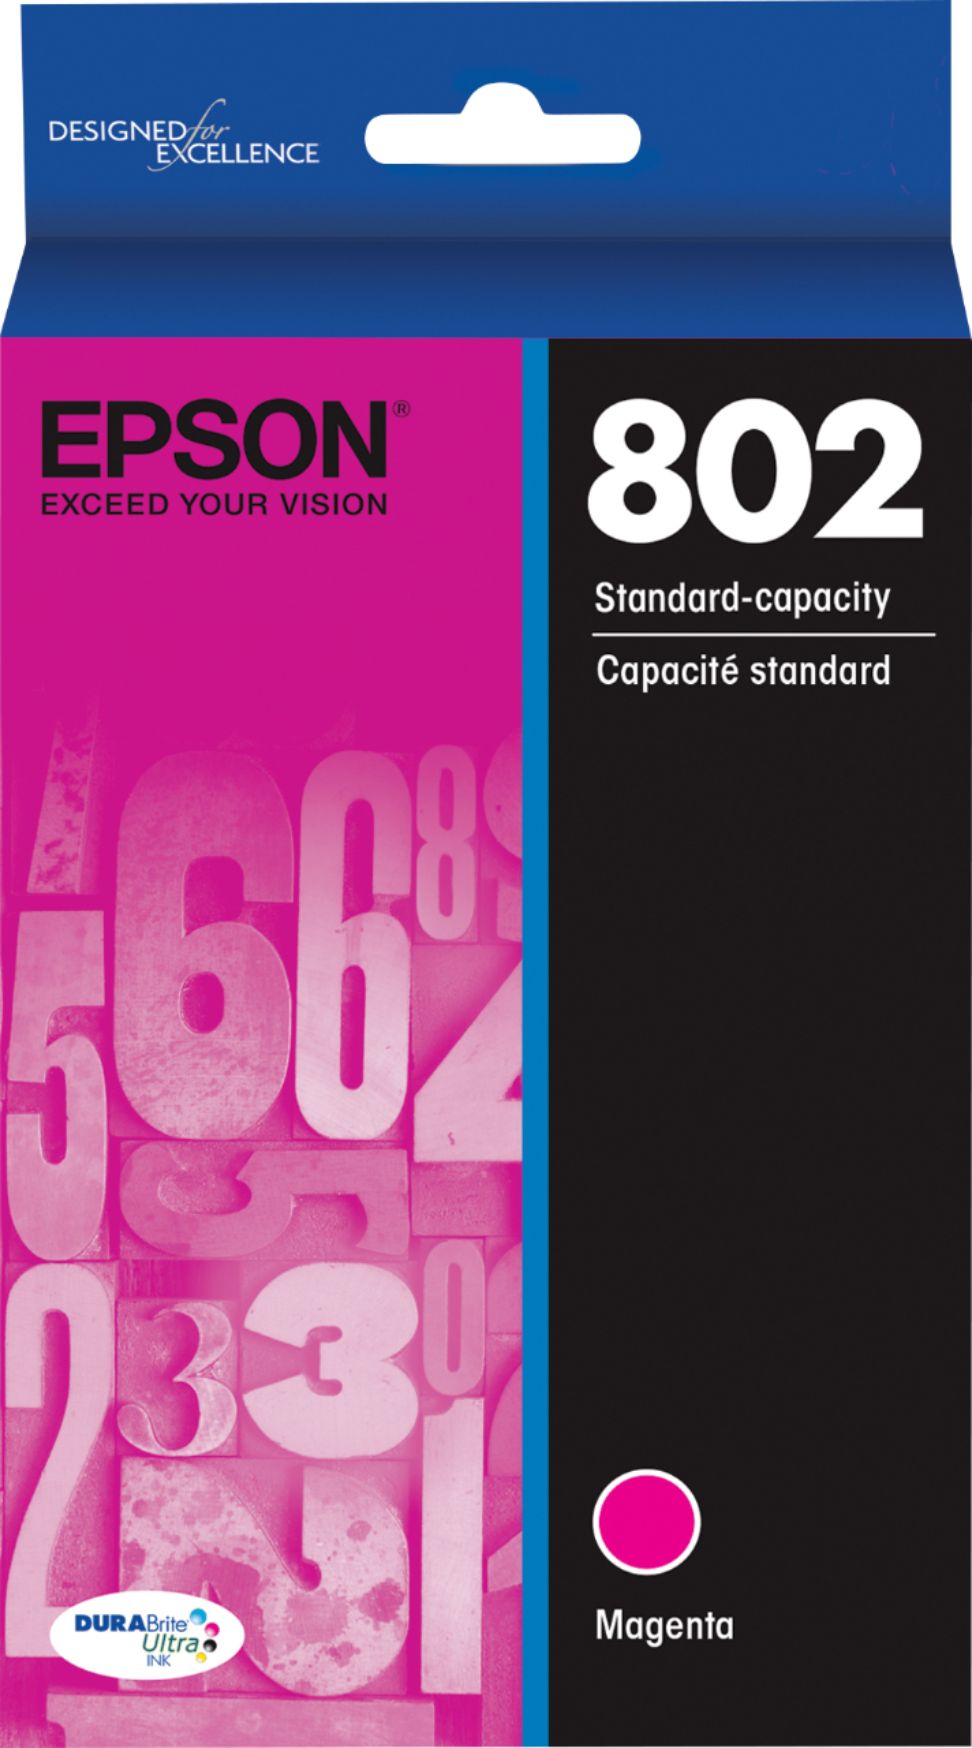 Epson 35XL Magenta Ink Cartridge (T3593) €23.36